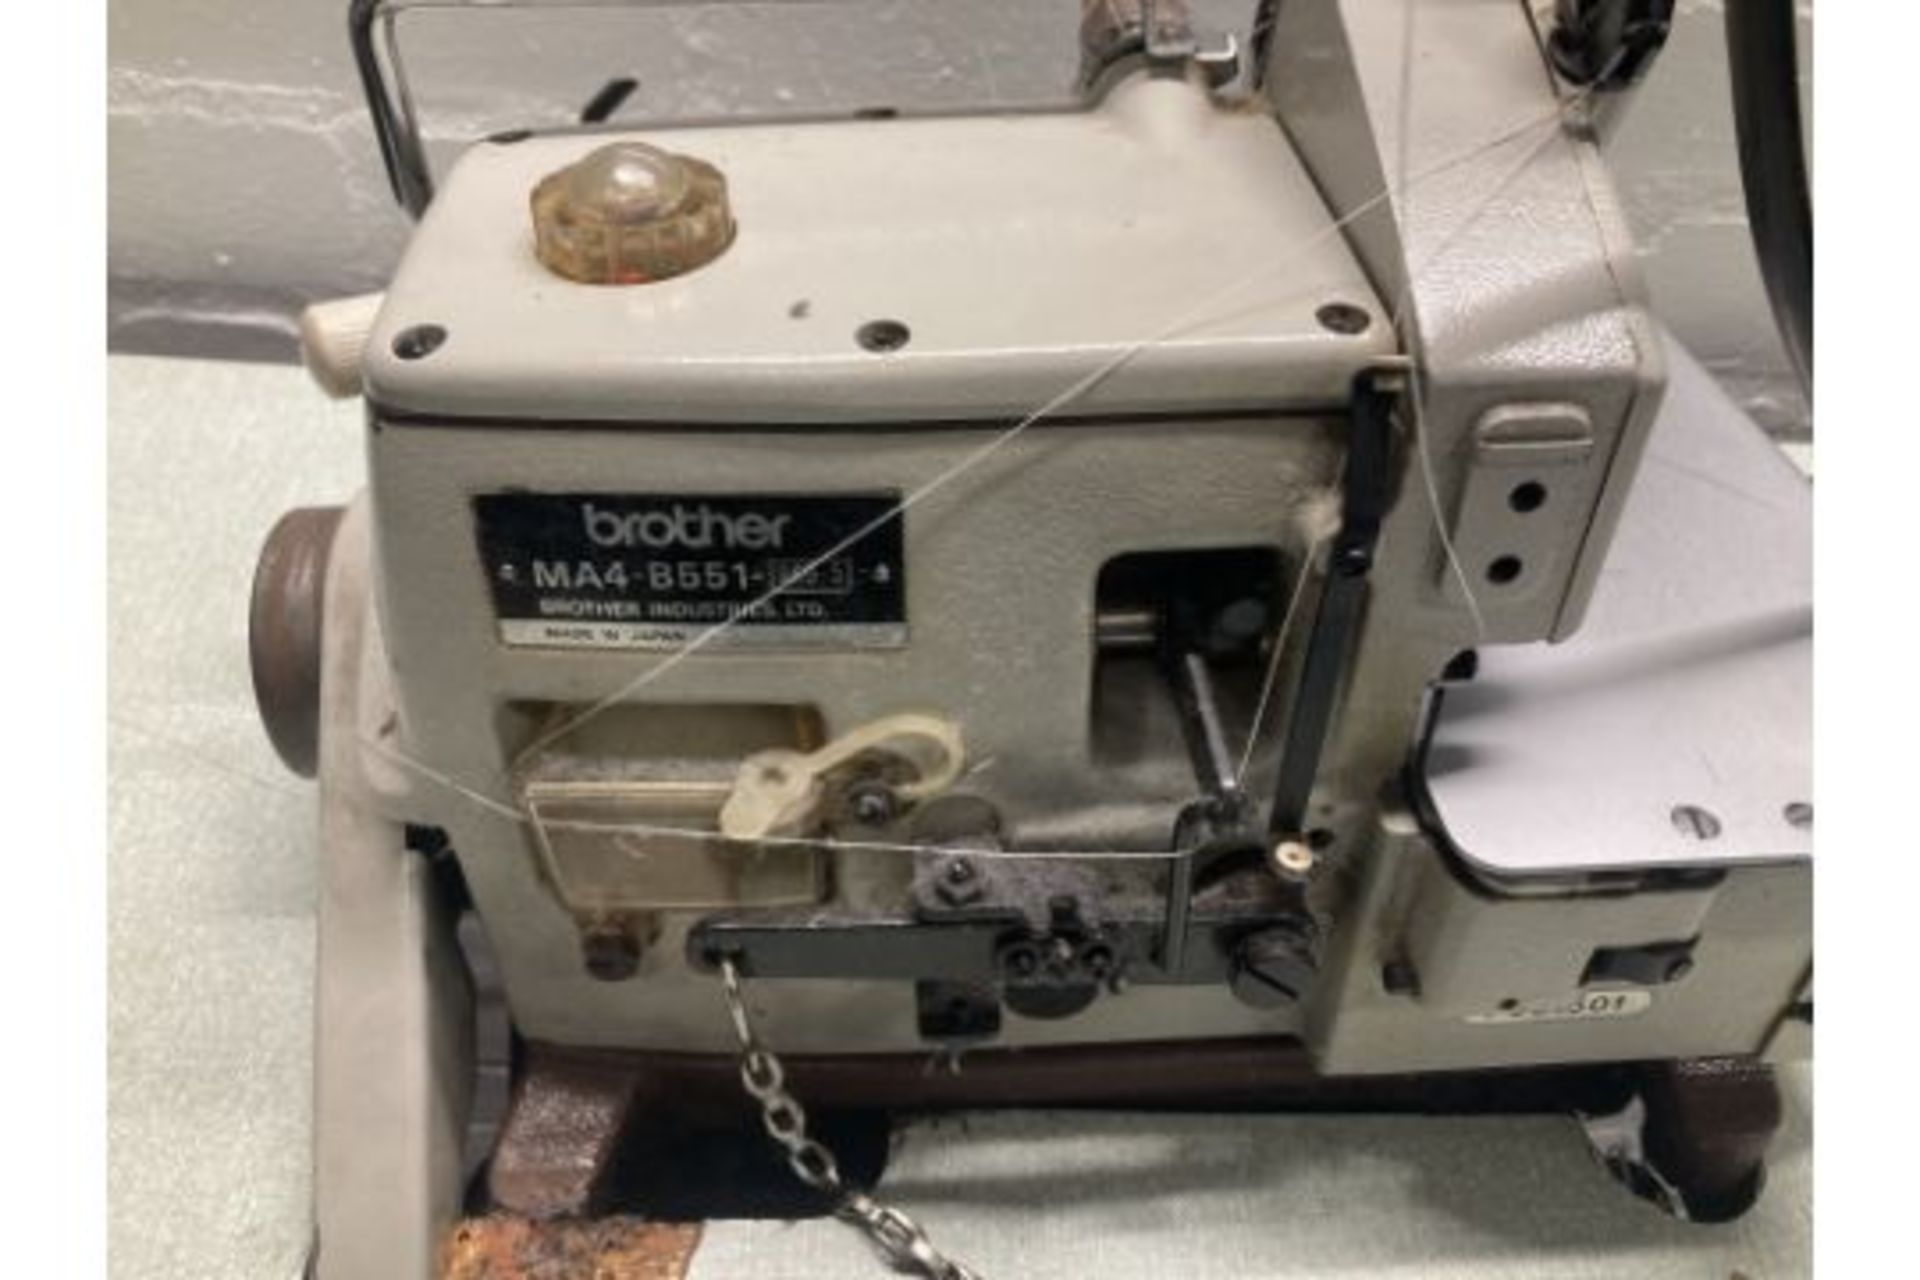 Brother Overlocker MA4-B551 069 S Thread Industrial Overlock Sewing Machine - Image 5 of 5